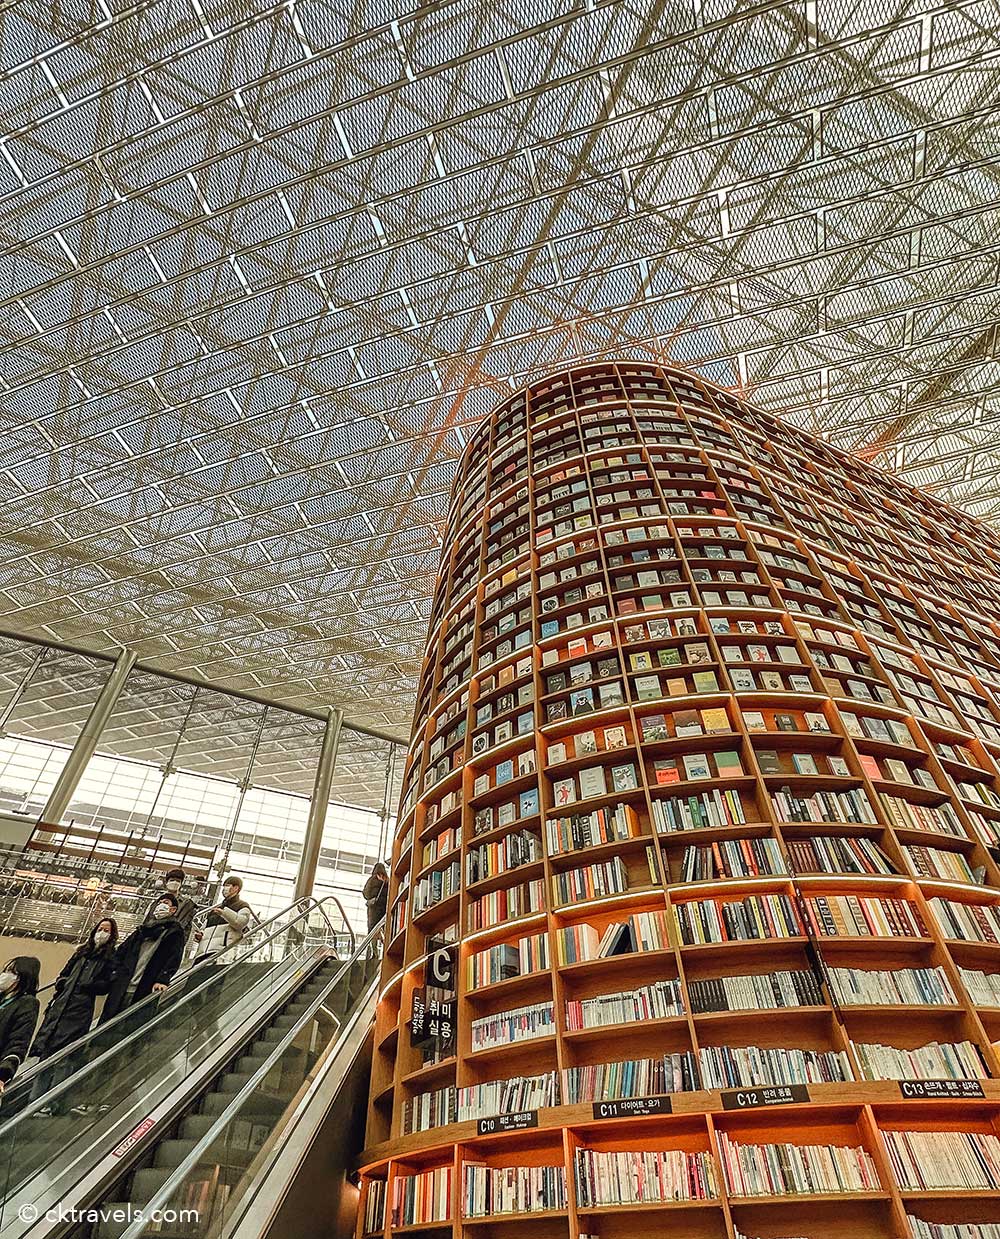 Starfield COEX Mall library Seoul